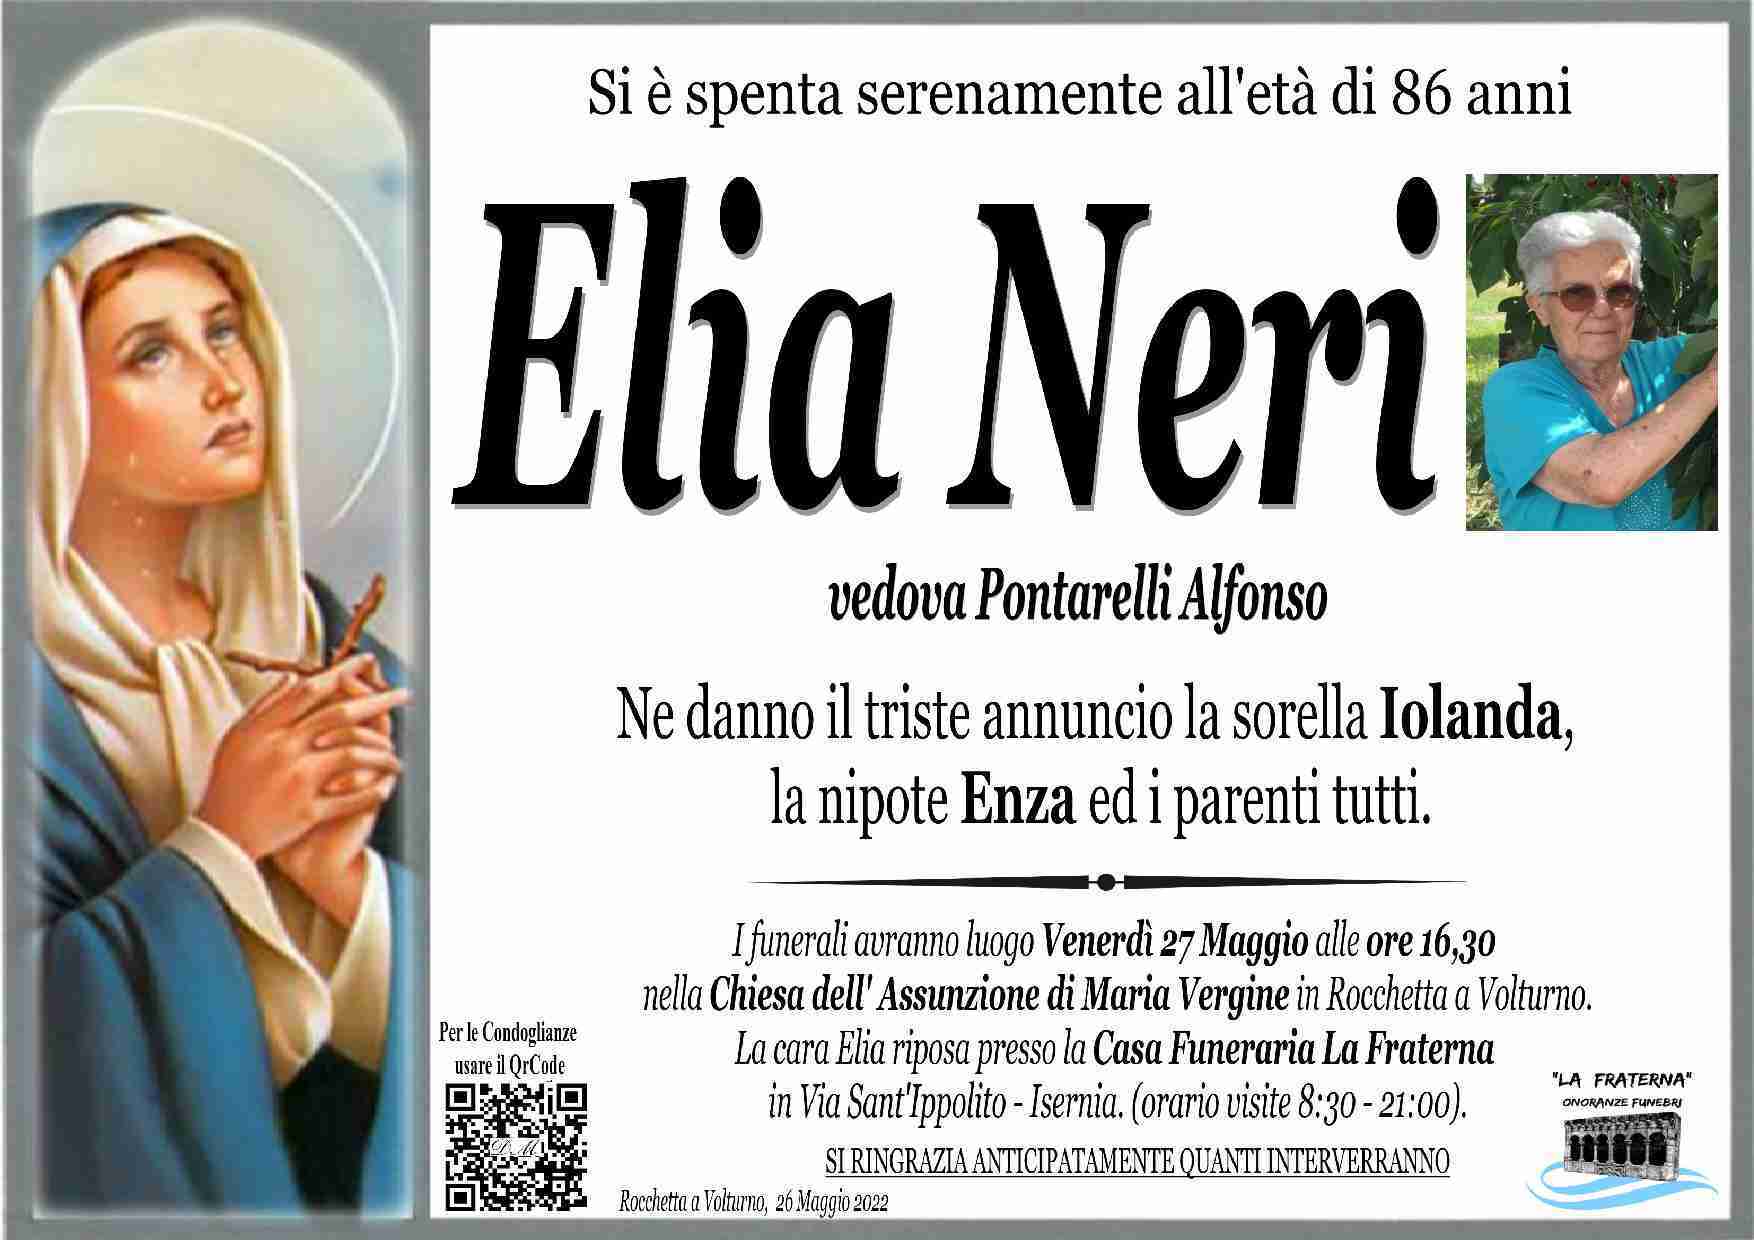 Elia Neri